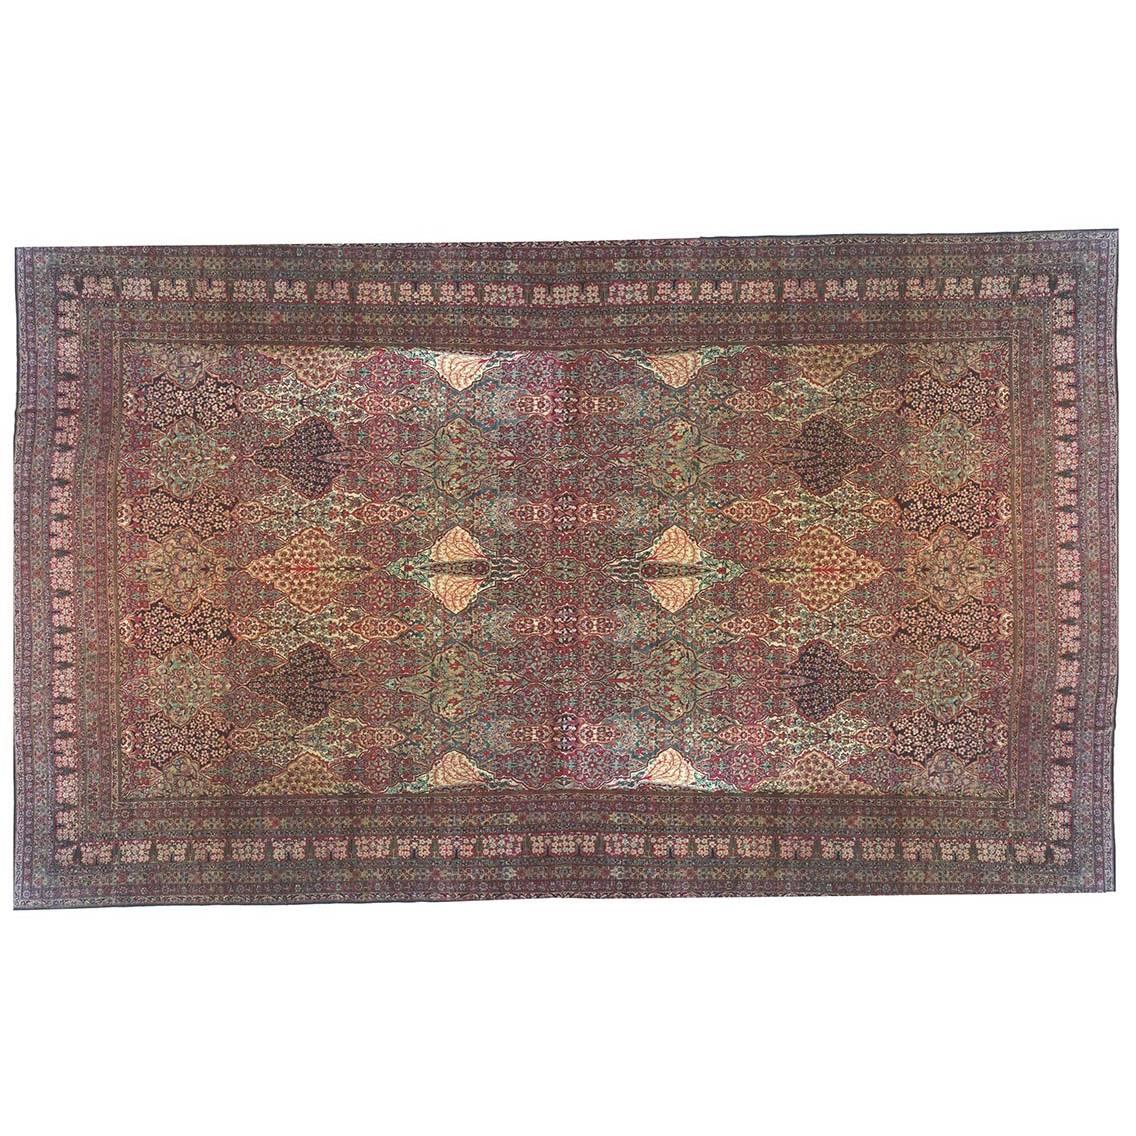 Antique Persian Lavar Oriental Carpet, Mansion Size, with Allover Floral Design